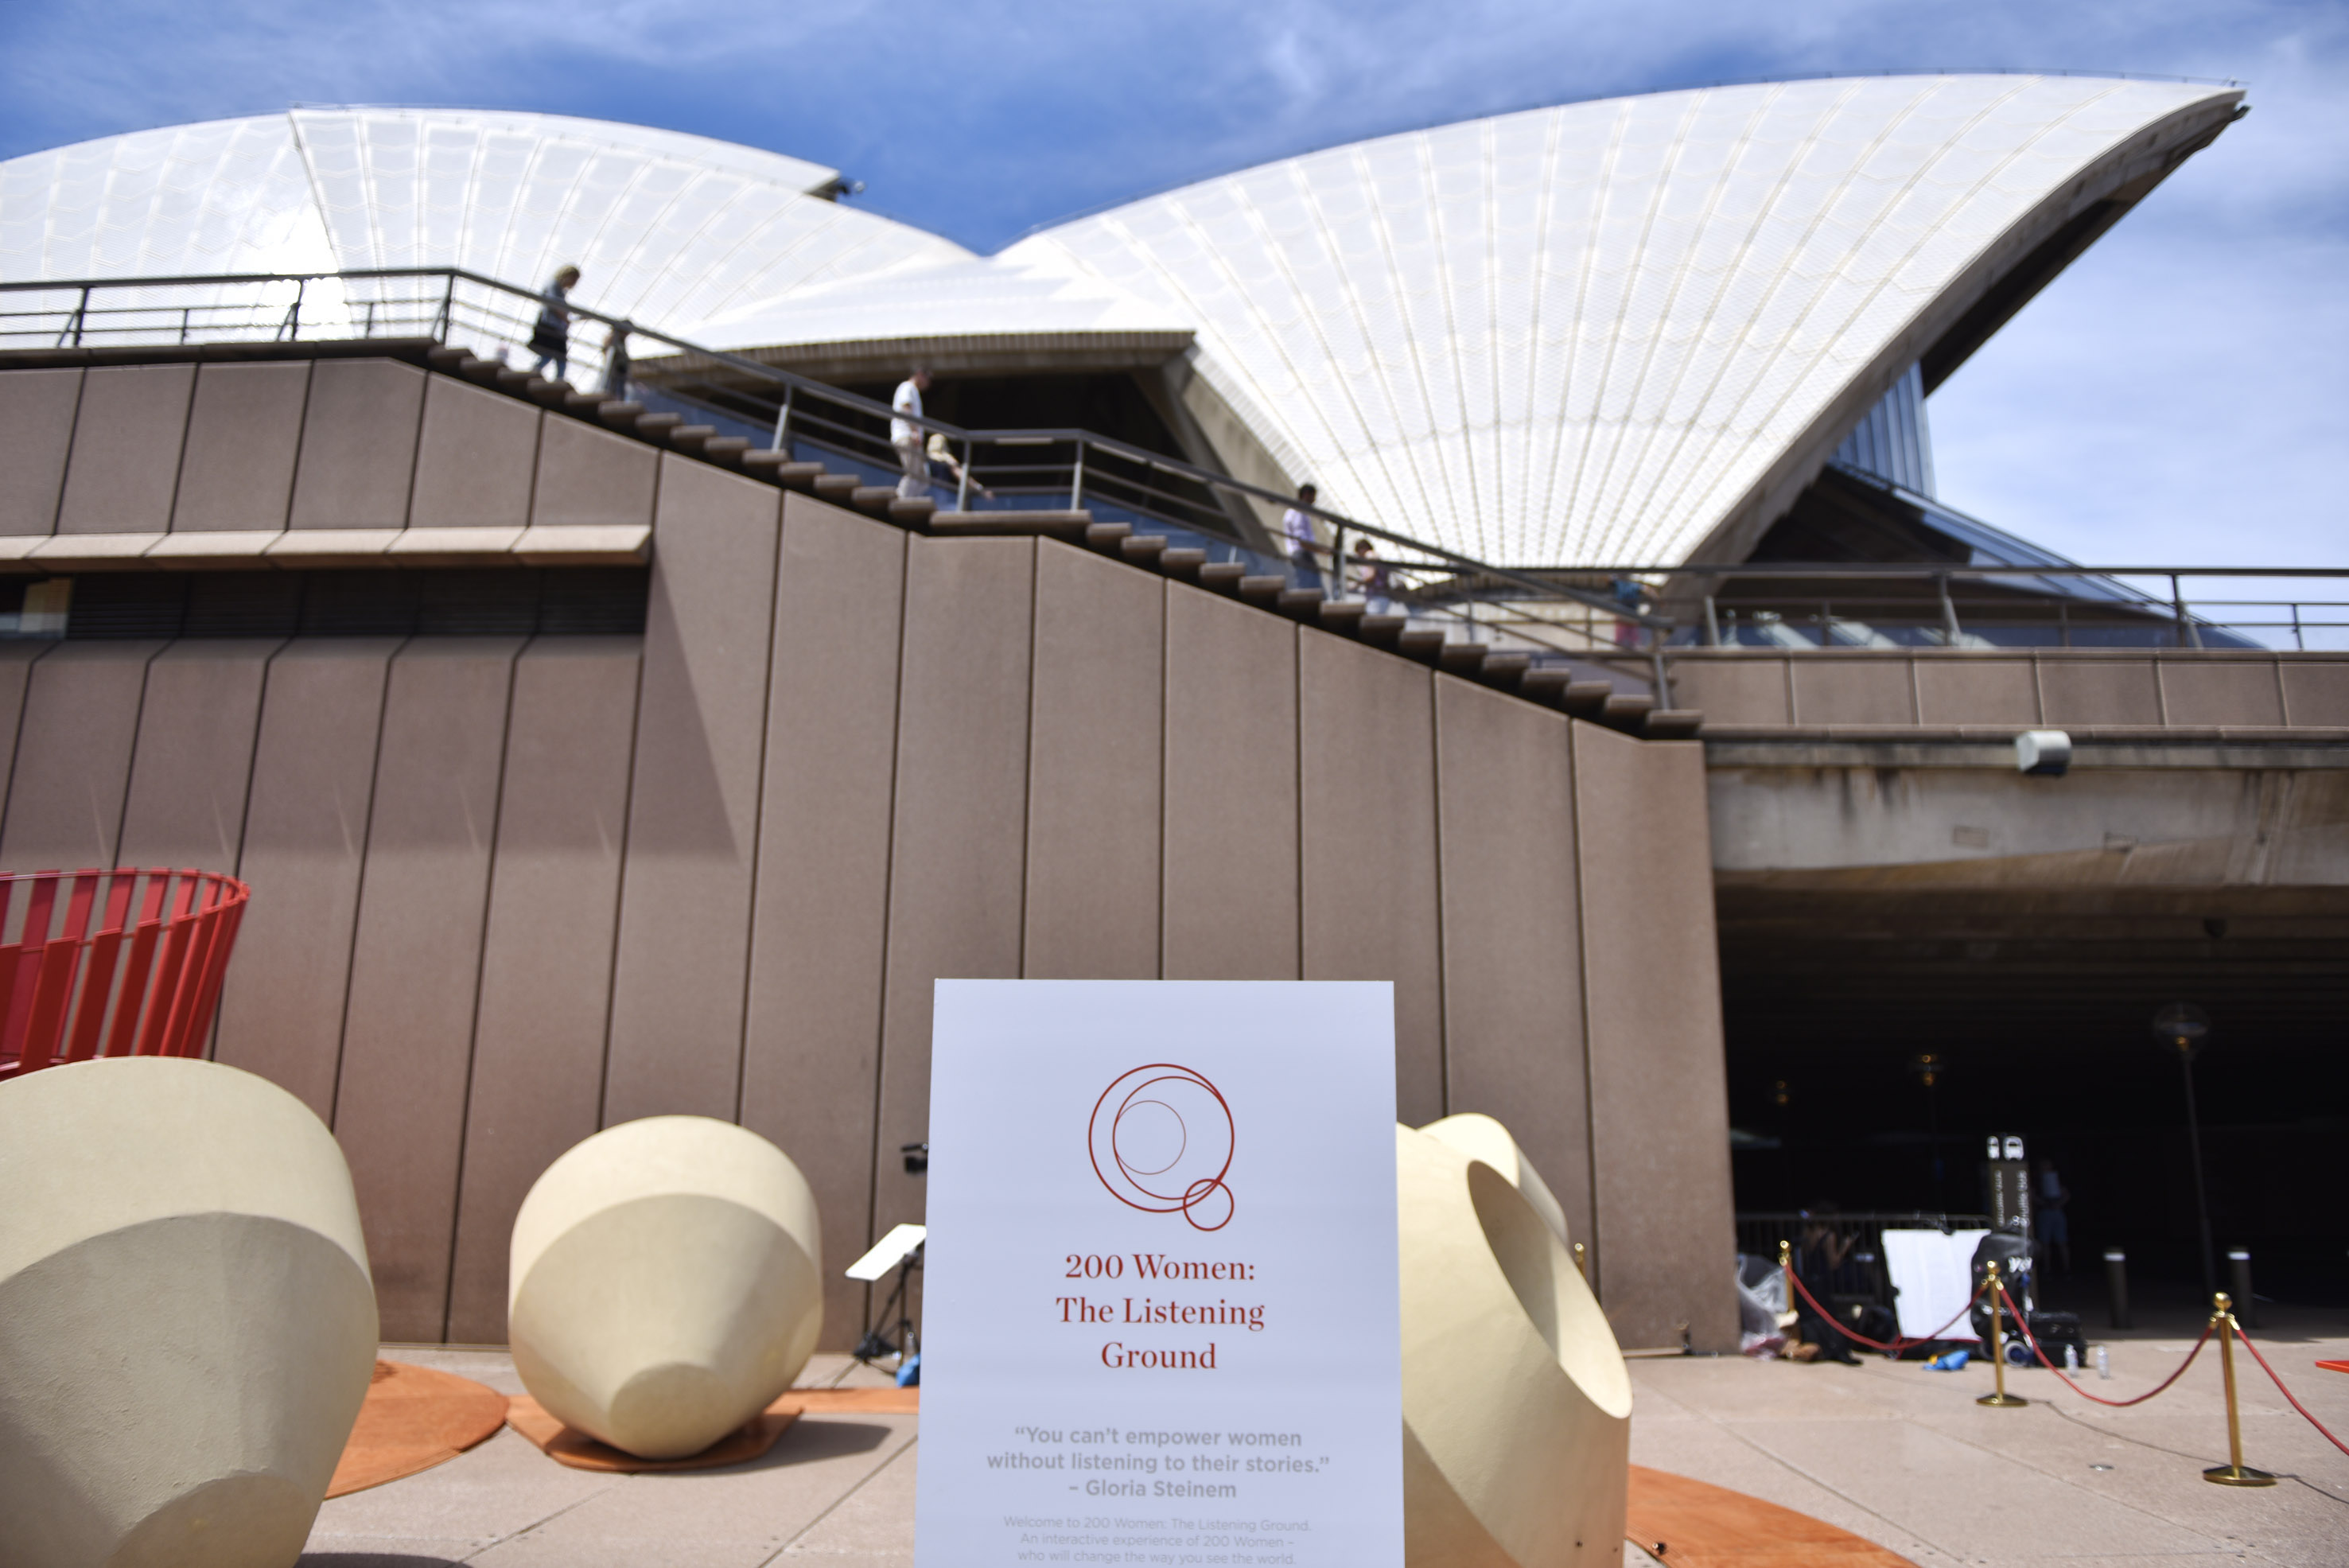 Outdoor Listening Exhibition, Sydney Opera House, Australia